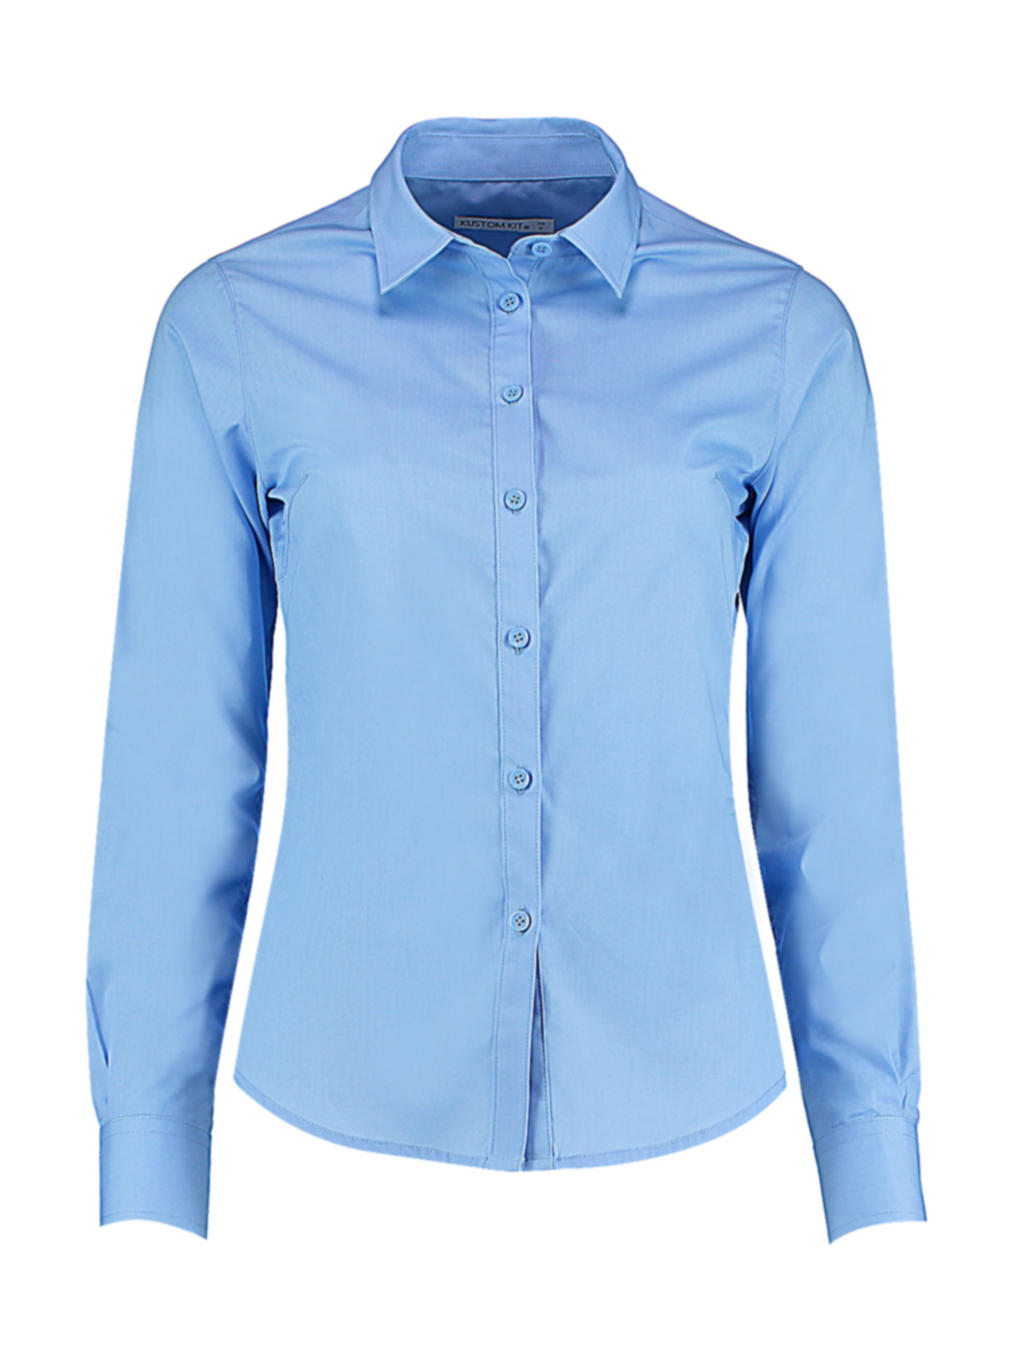  Womens Tailored Fit Poplin Shirt in Farbe Light Blue